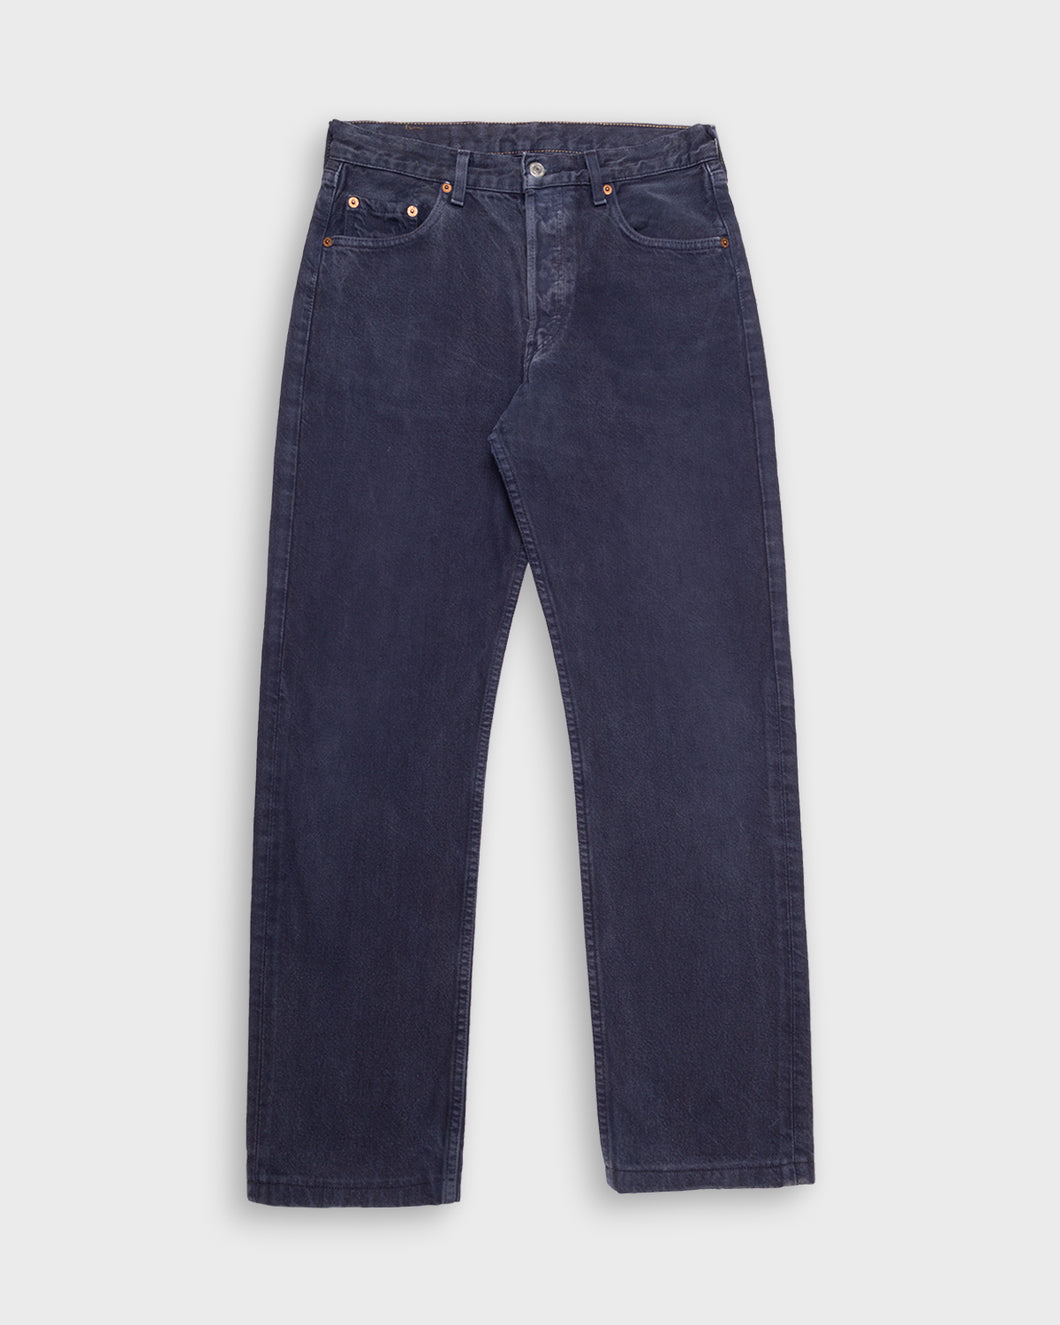 Levi's 501 dark blue jeans